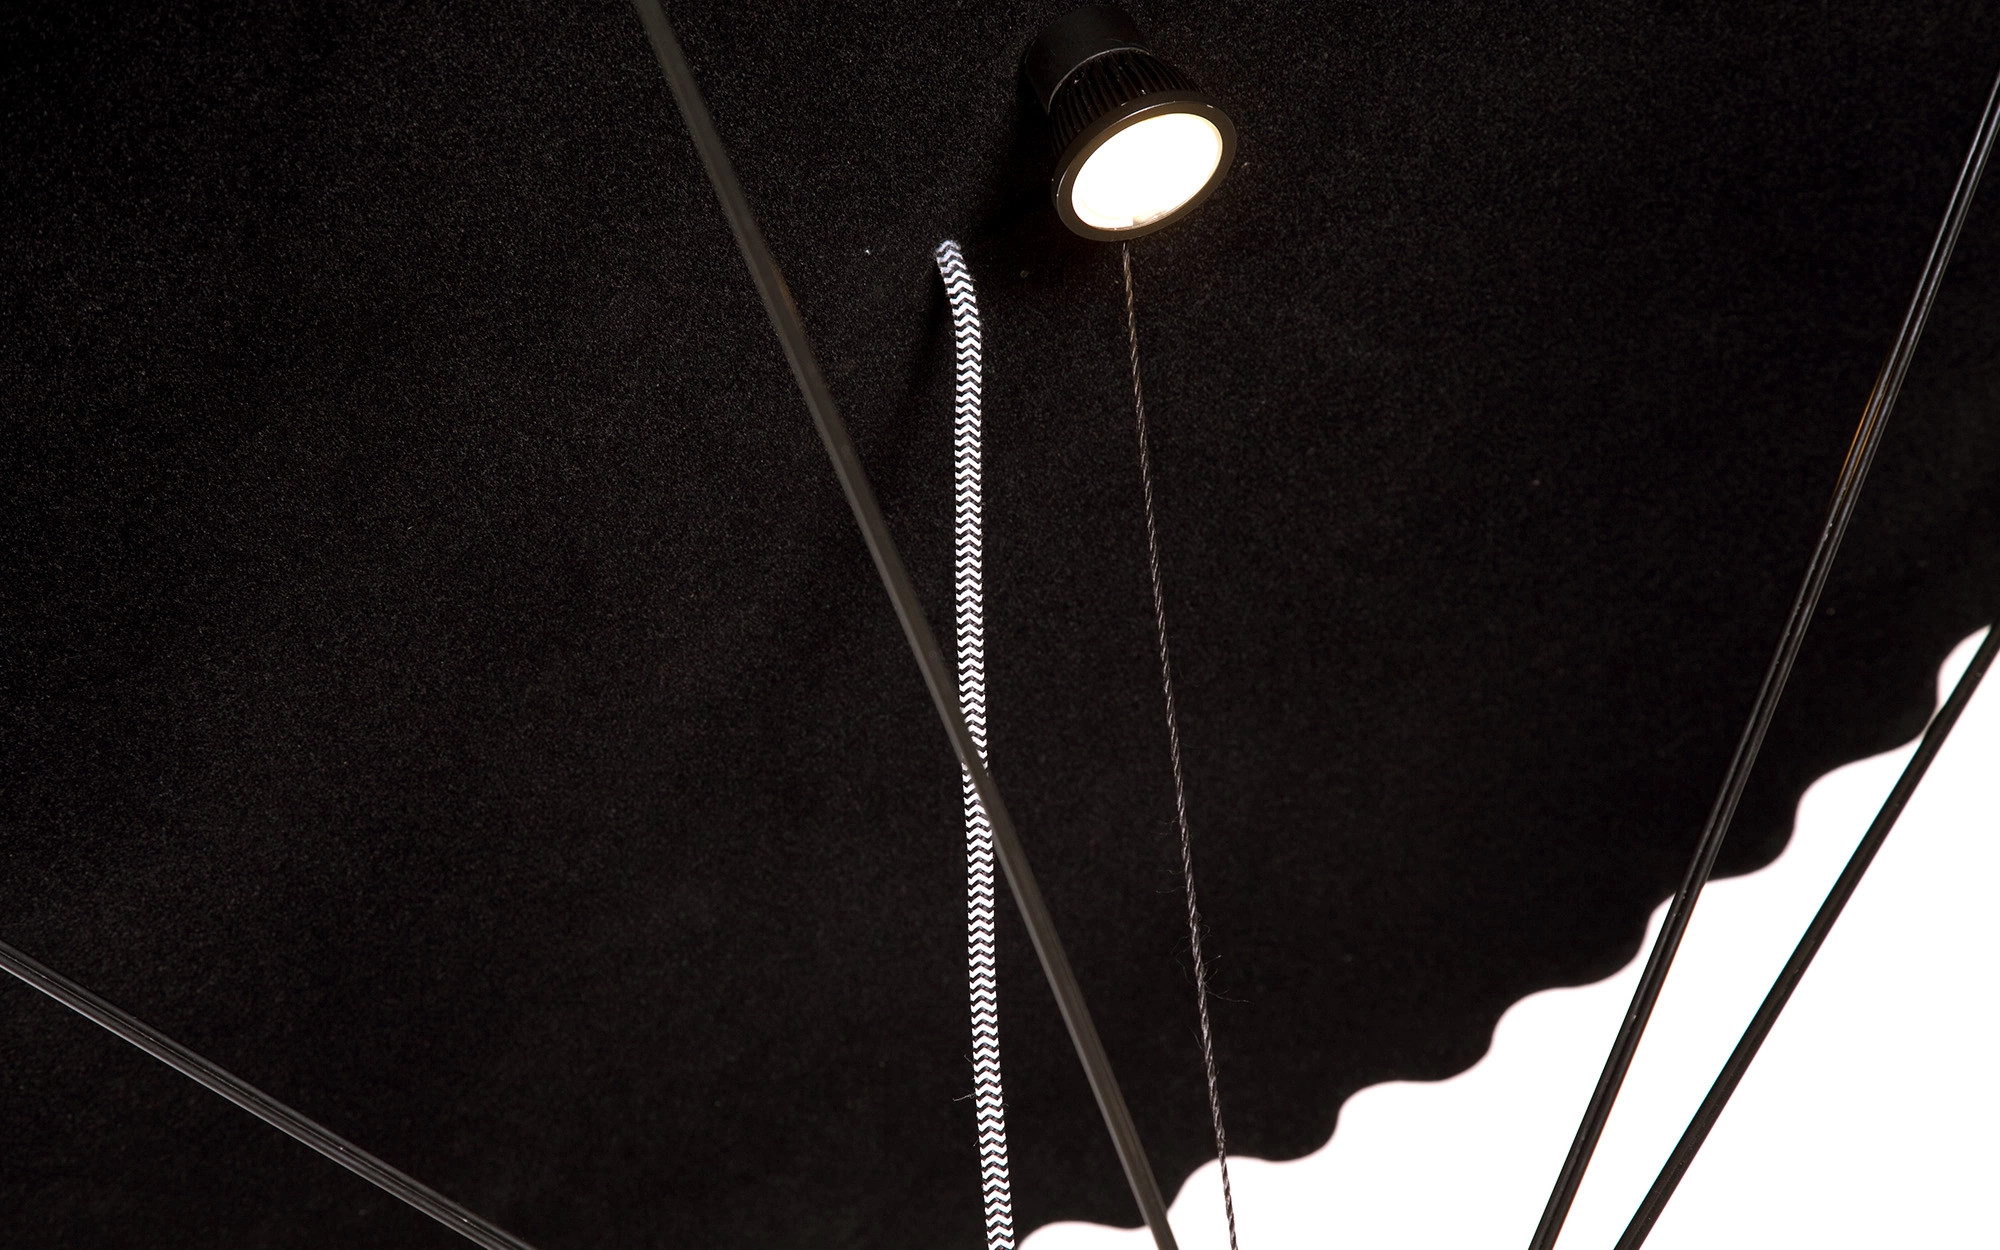 Chuugi (Devotion) - Studio Wieki Somers - Floor light - Galerie kreo